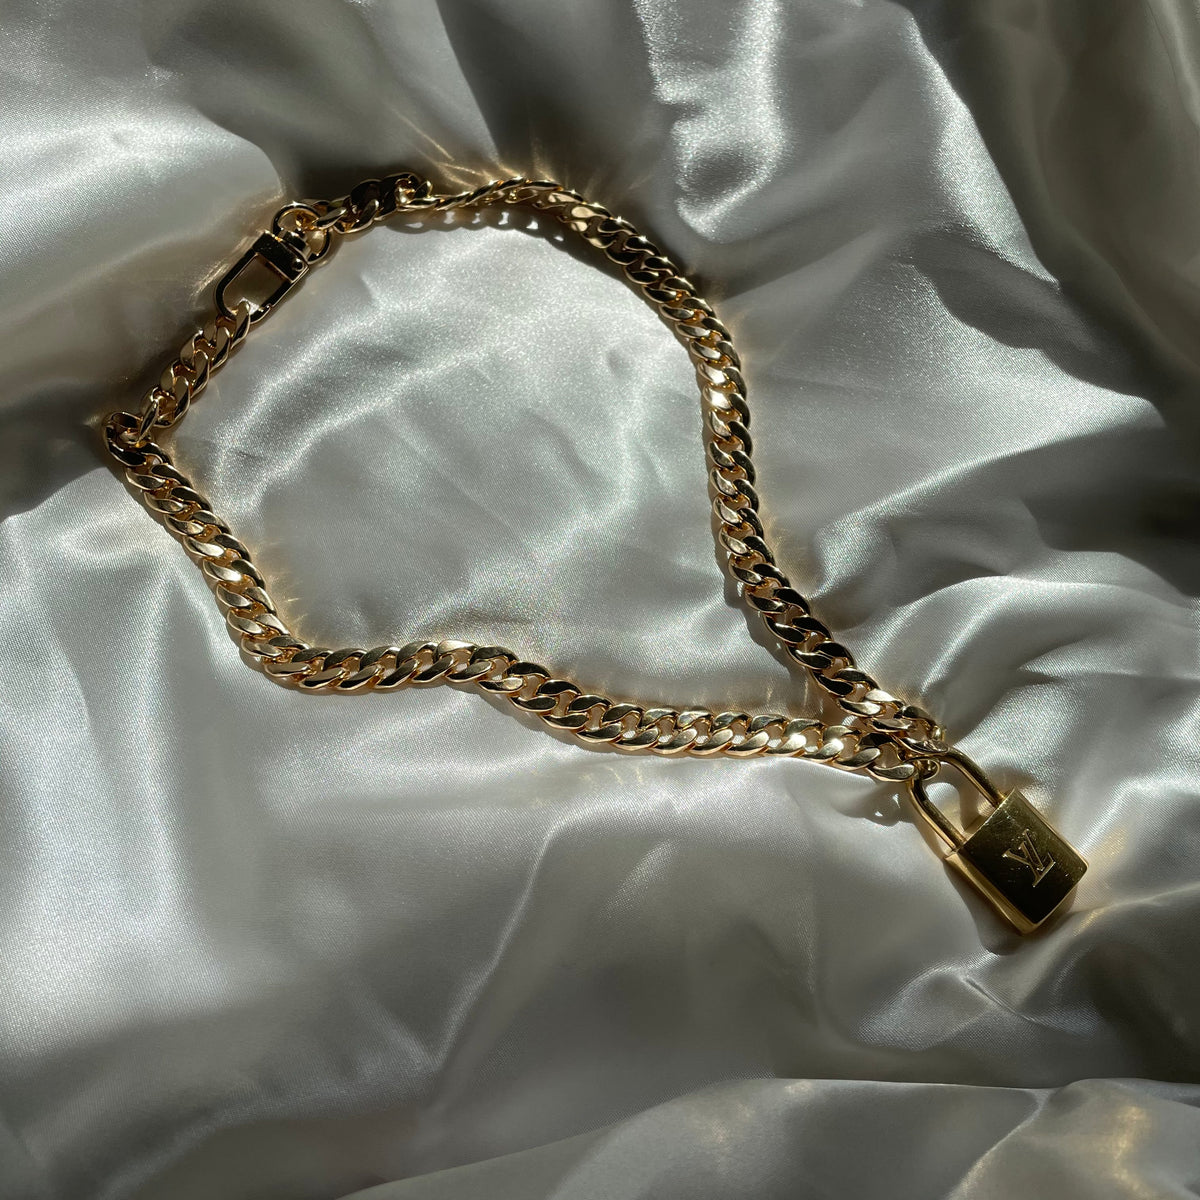 Rework Vintage Louis Vuitton Lock on Necklace (No Key) – Relic the Label